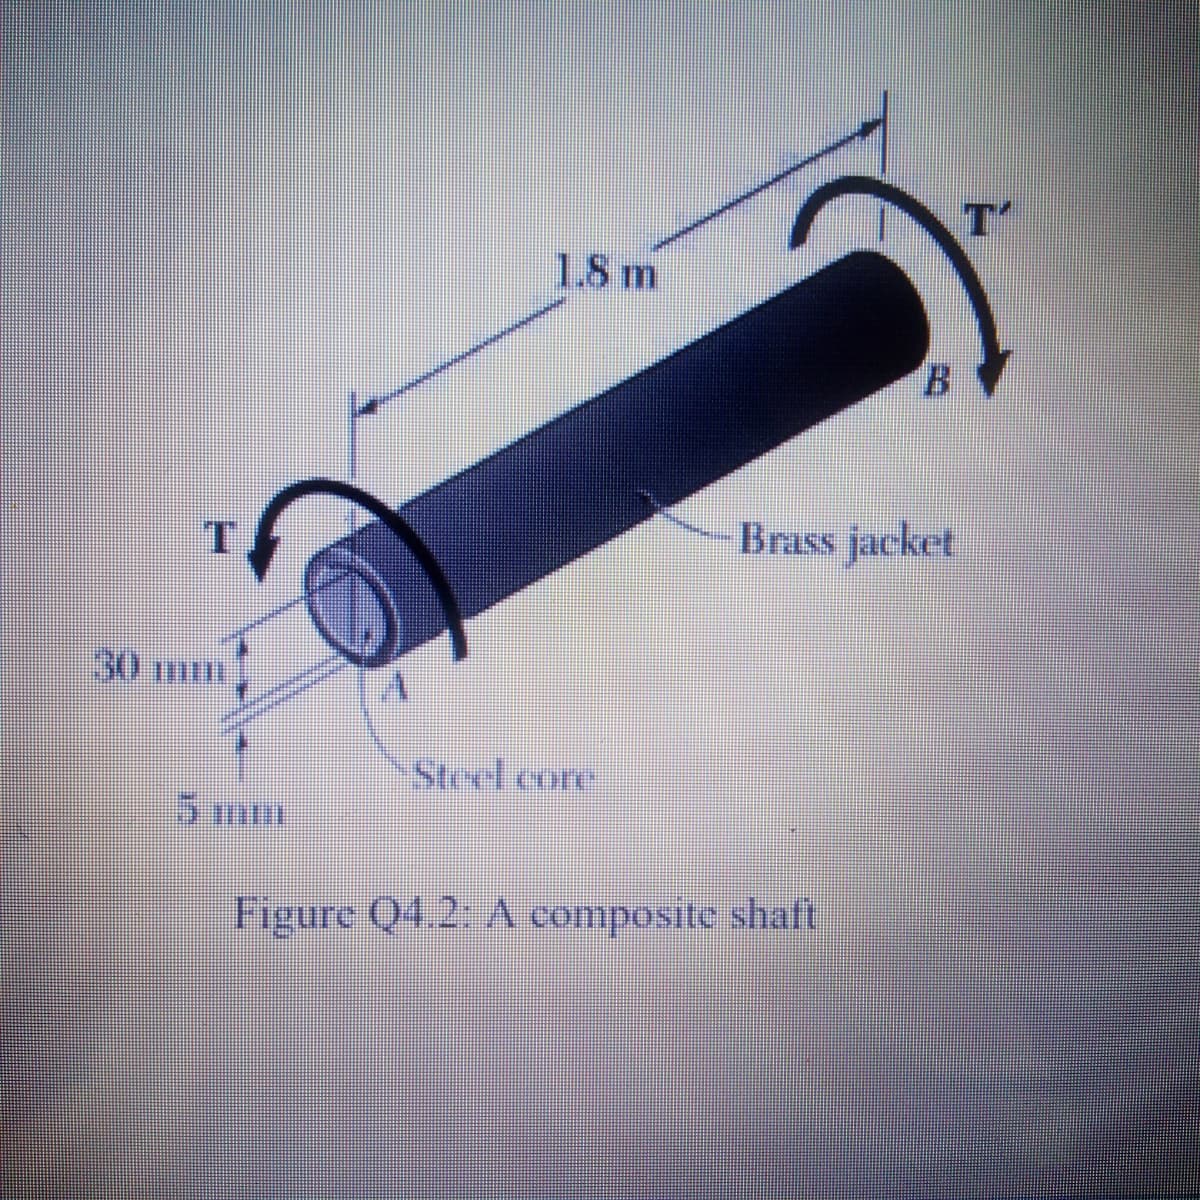 T
1.8 m
T
Brass jacket
30 mu
Steel core
கமm
Figure Q4.2: A composite shaft
